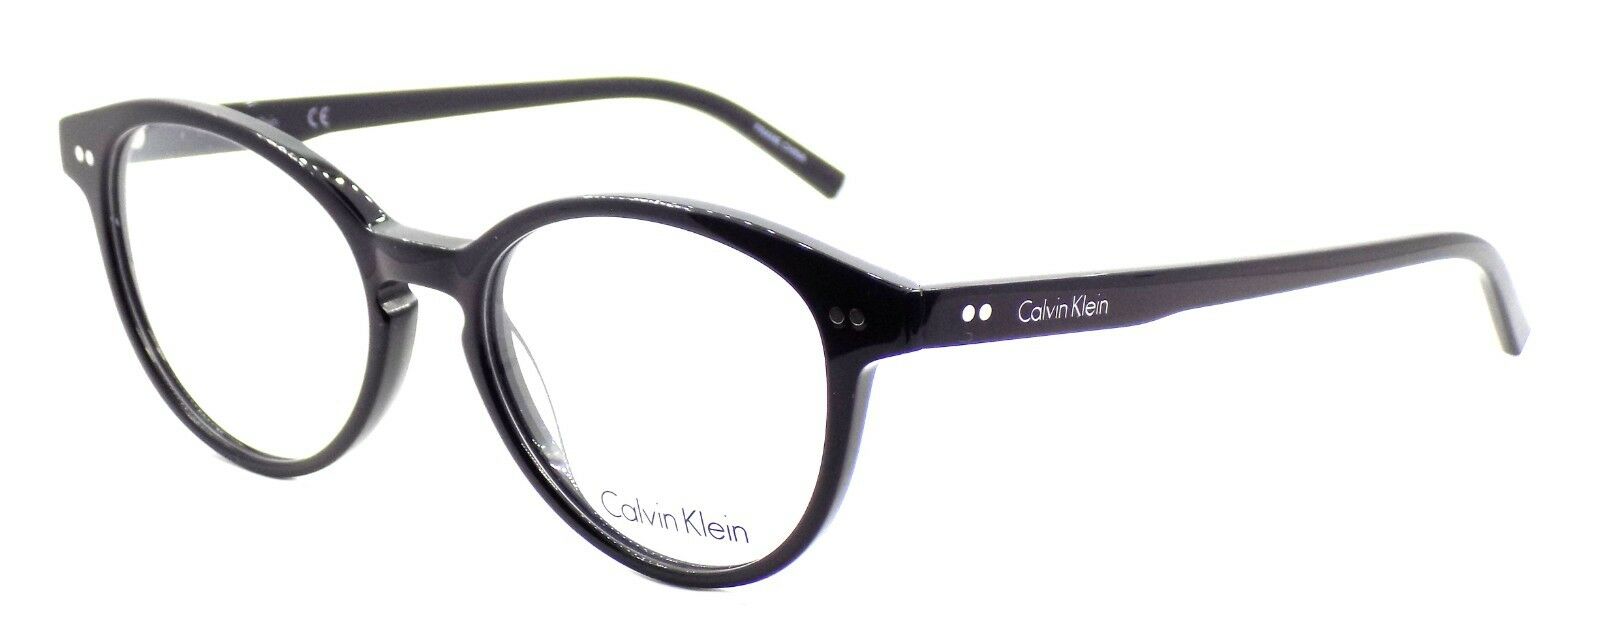 1-Calvin Klein CK5991 001 Women's Eyeglasses Frames Black 52-18-140 + CASE-750779117460-IKSpecs